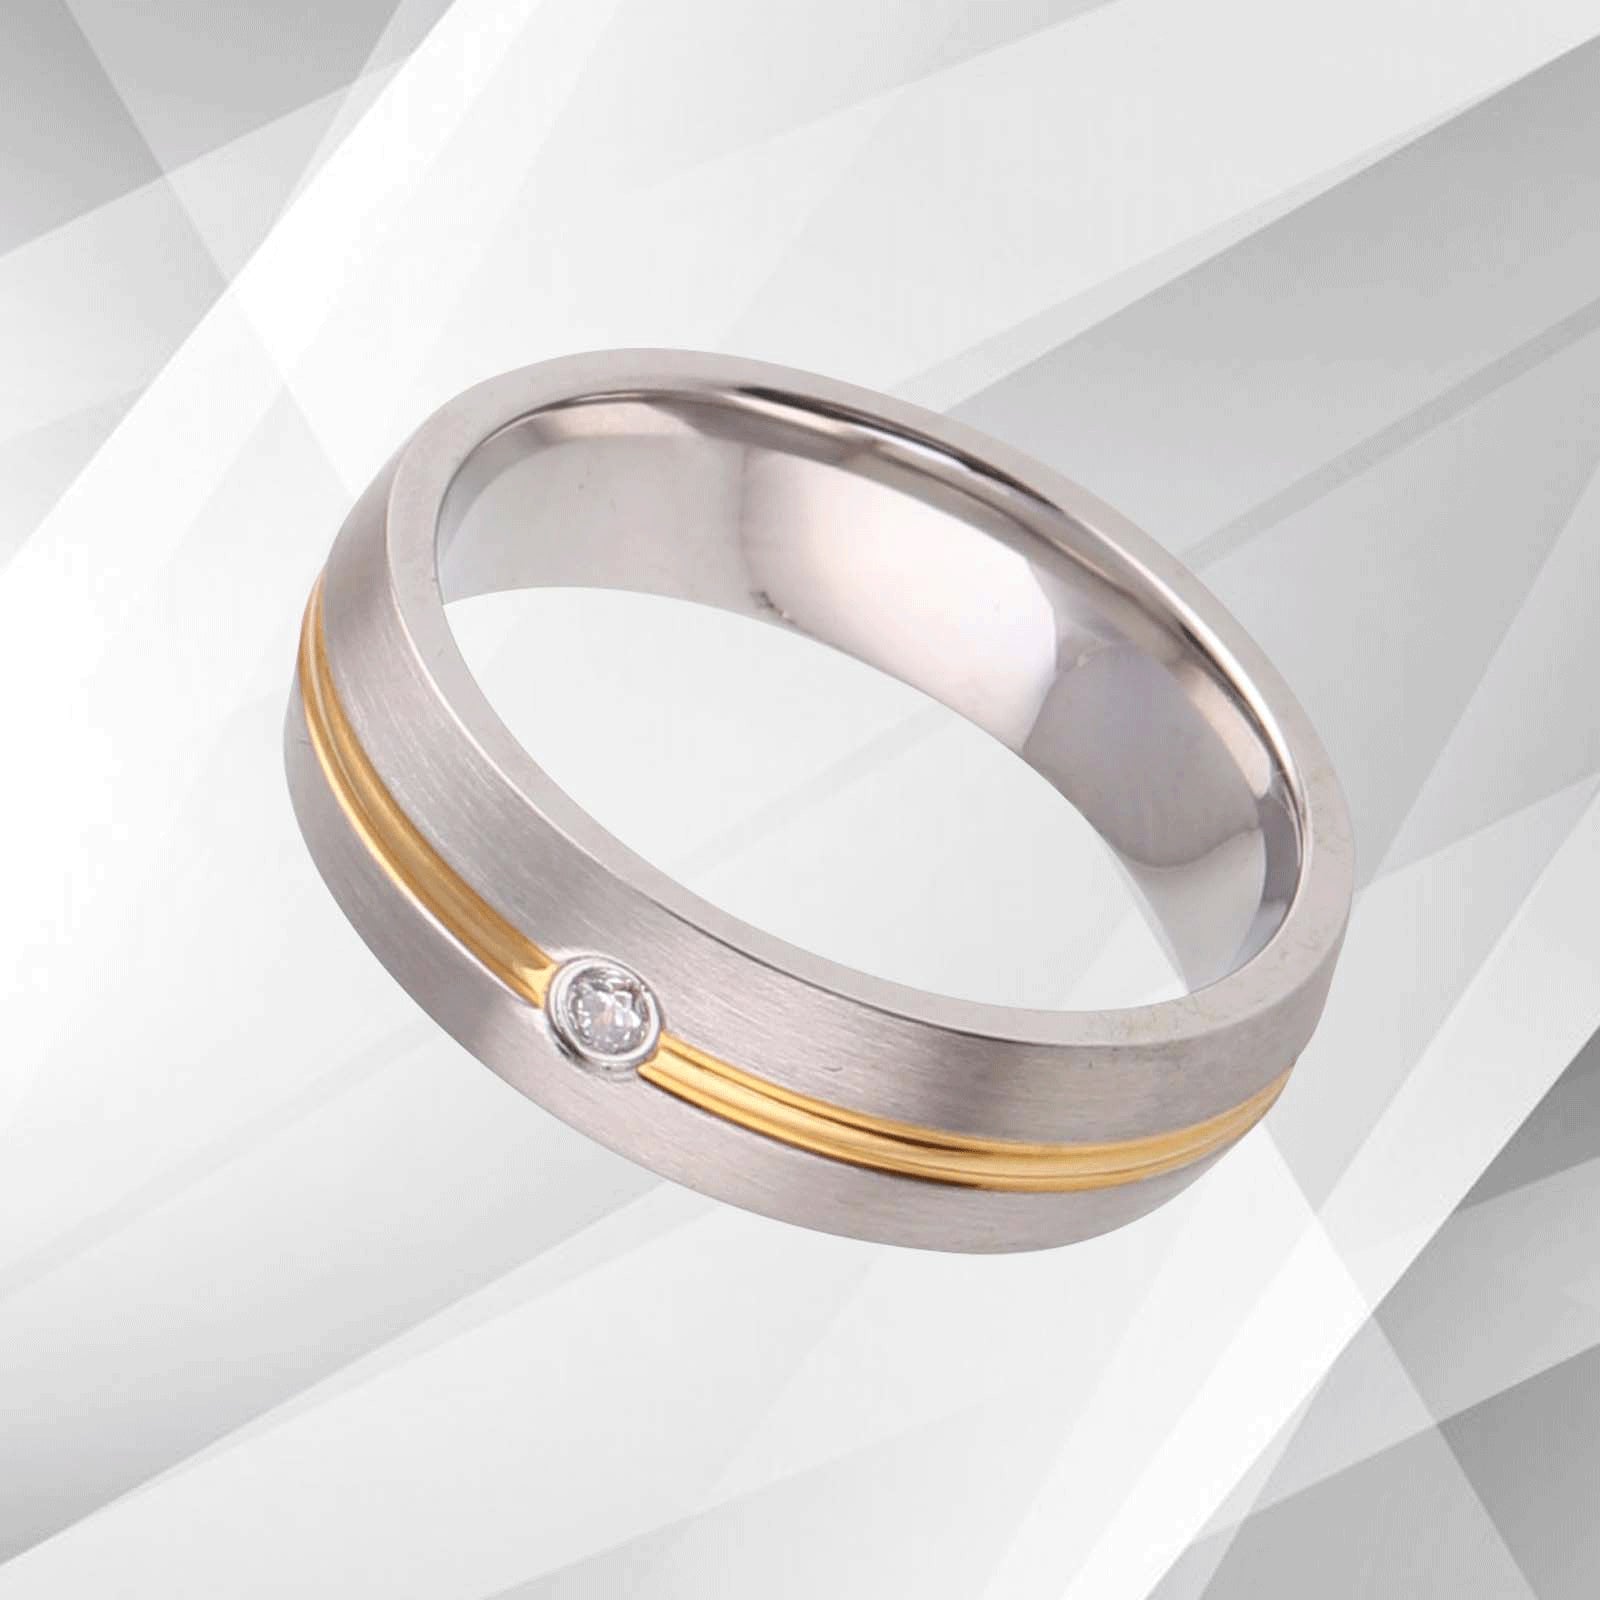 Titanium CZ Diamond Wedding Band Ring - 6mm Wide, 18Ct Yellow & White Gold Finish, Comfort Fit - Women's Engagement Ring - Jewelry & Watches - Bijou Her -  -  - 